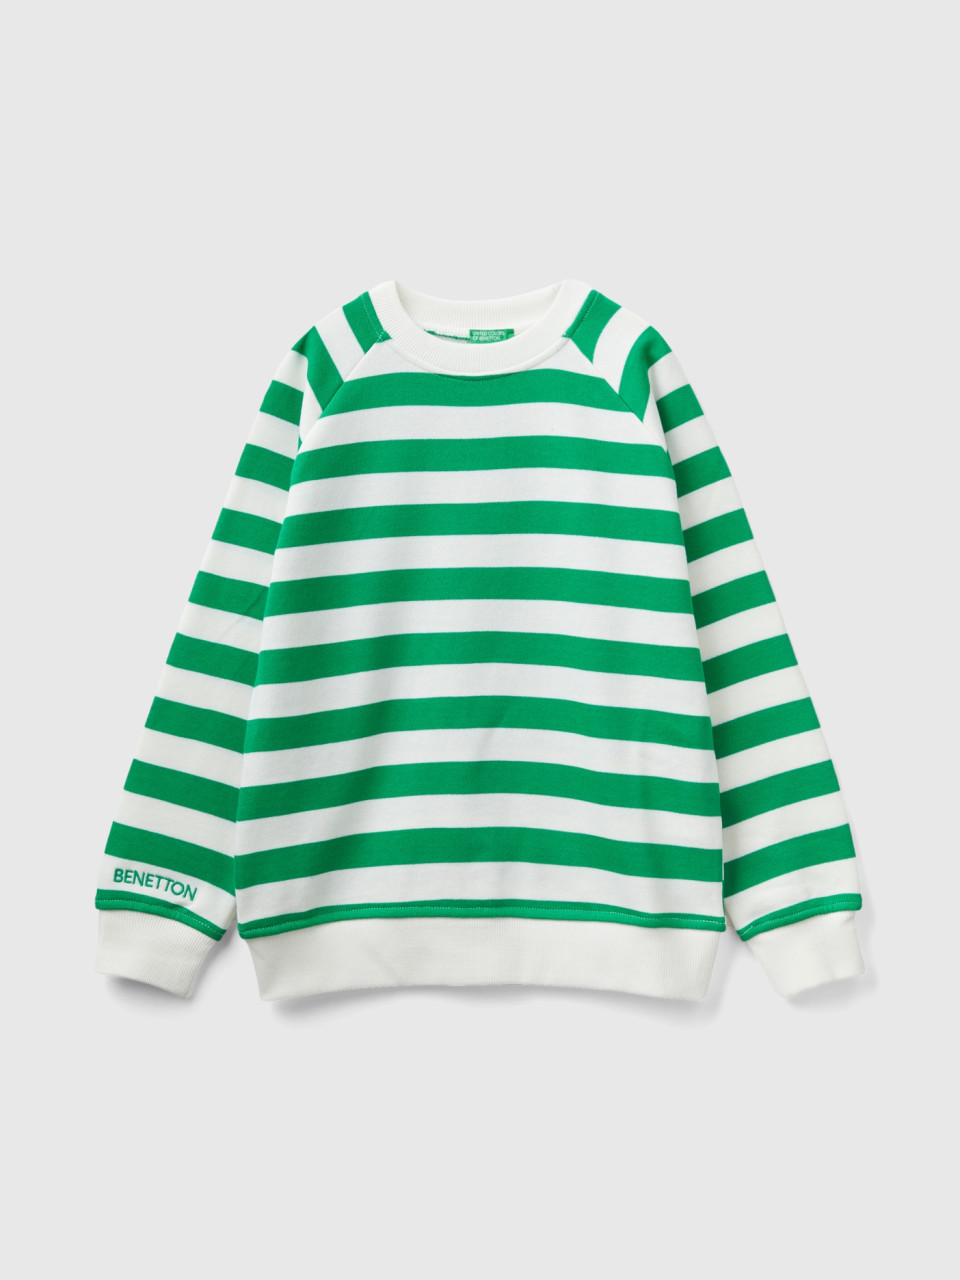 Benetton, Green And White Striped Sweatshirt, Multi-color, Kids